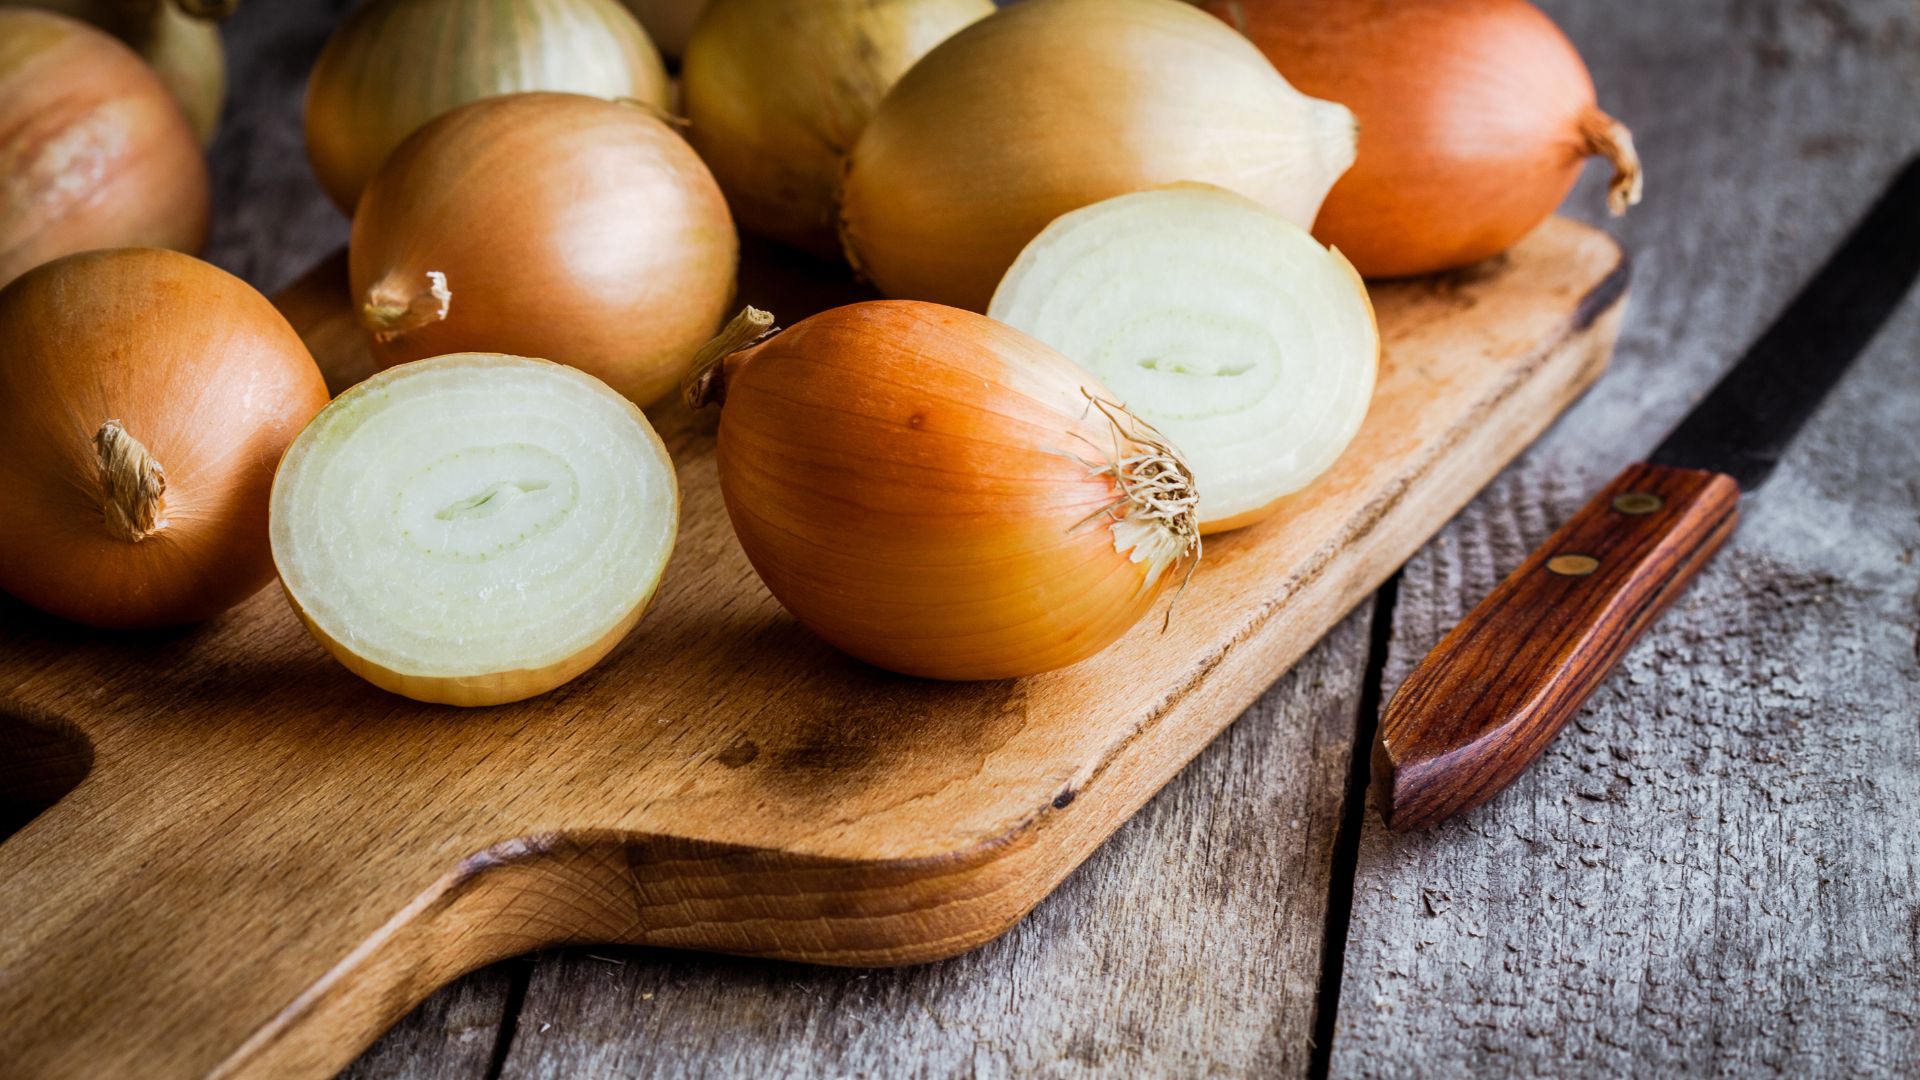 Onions peel quercetin